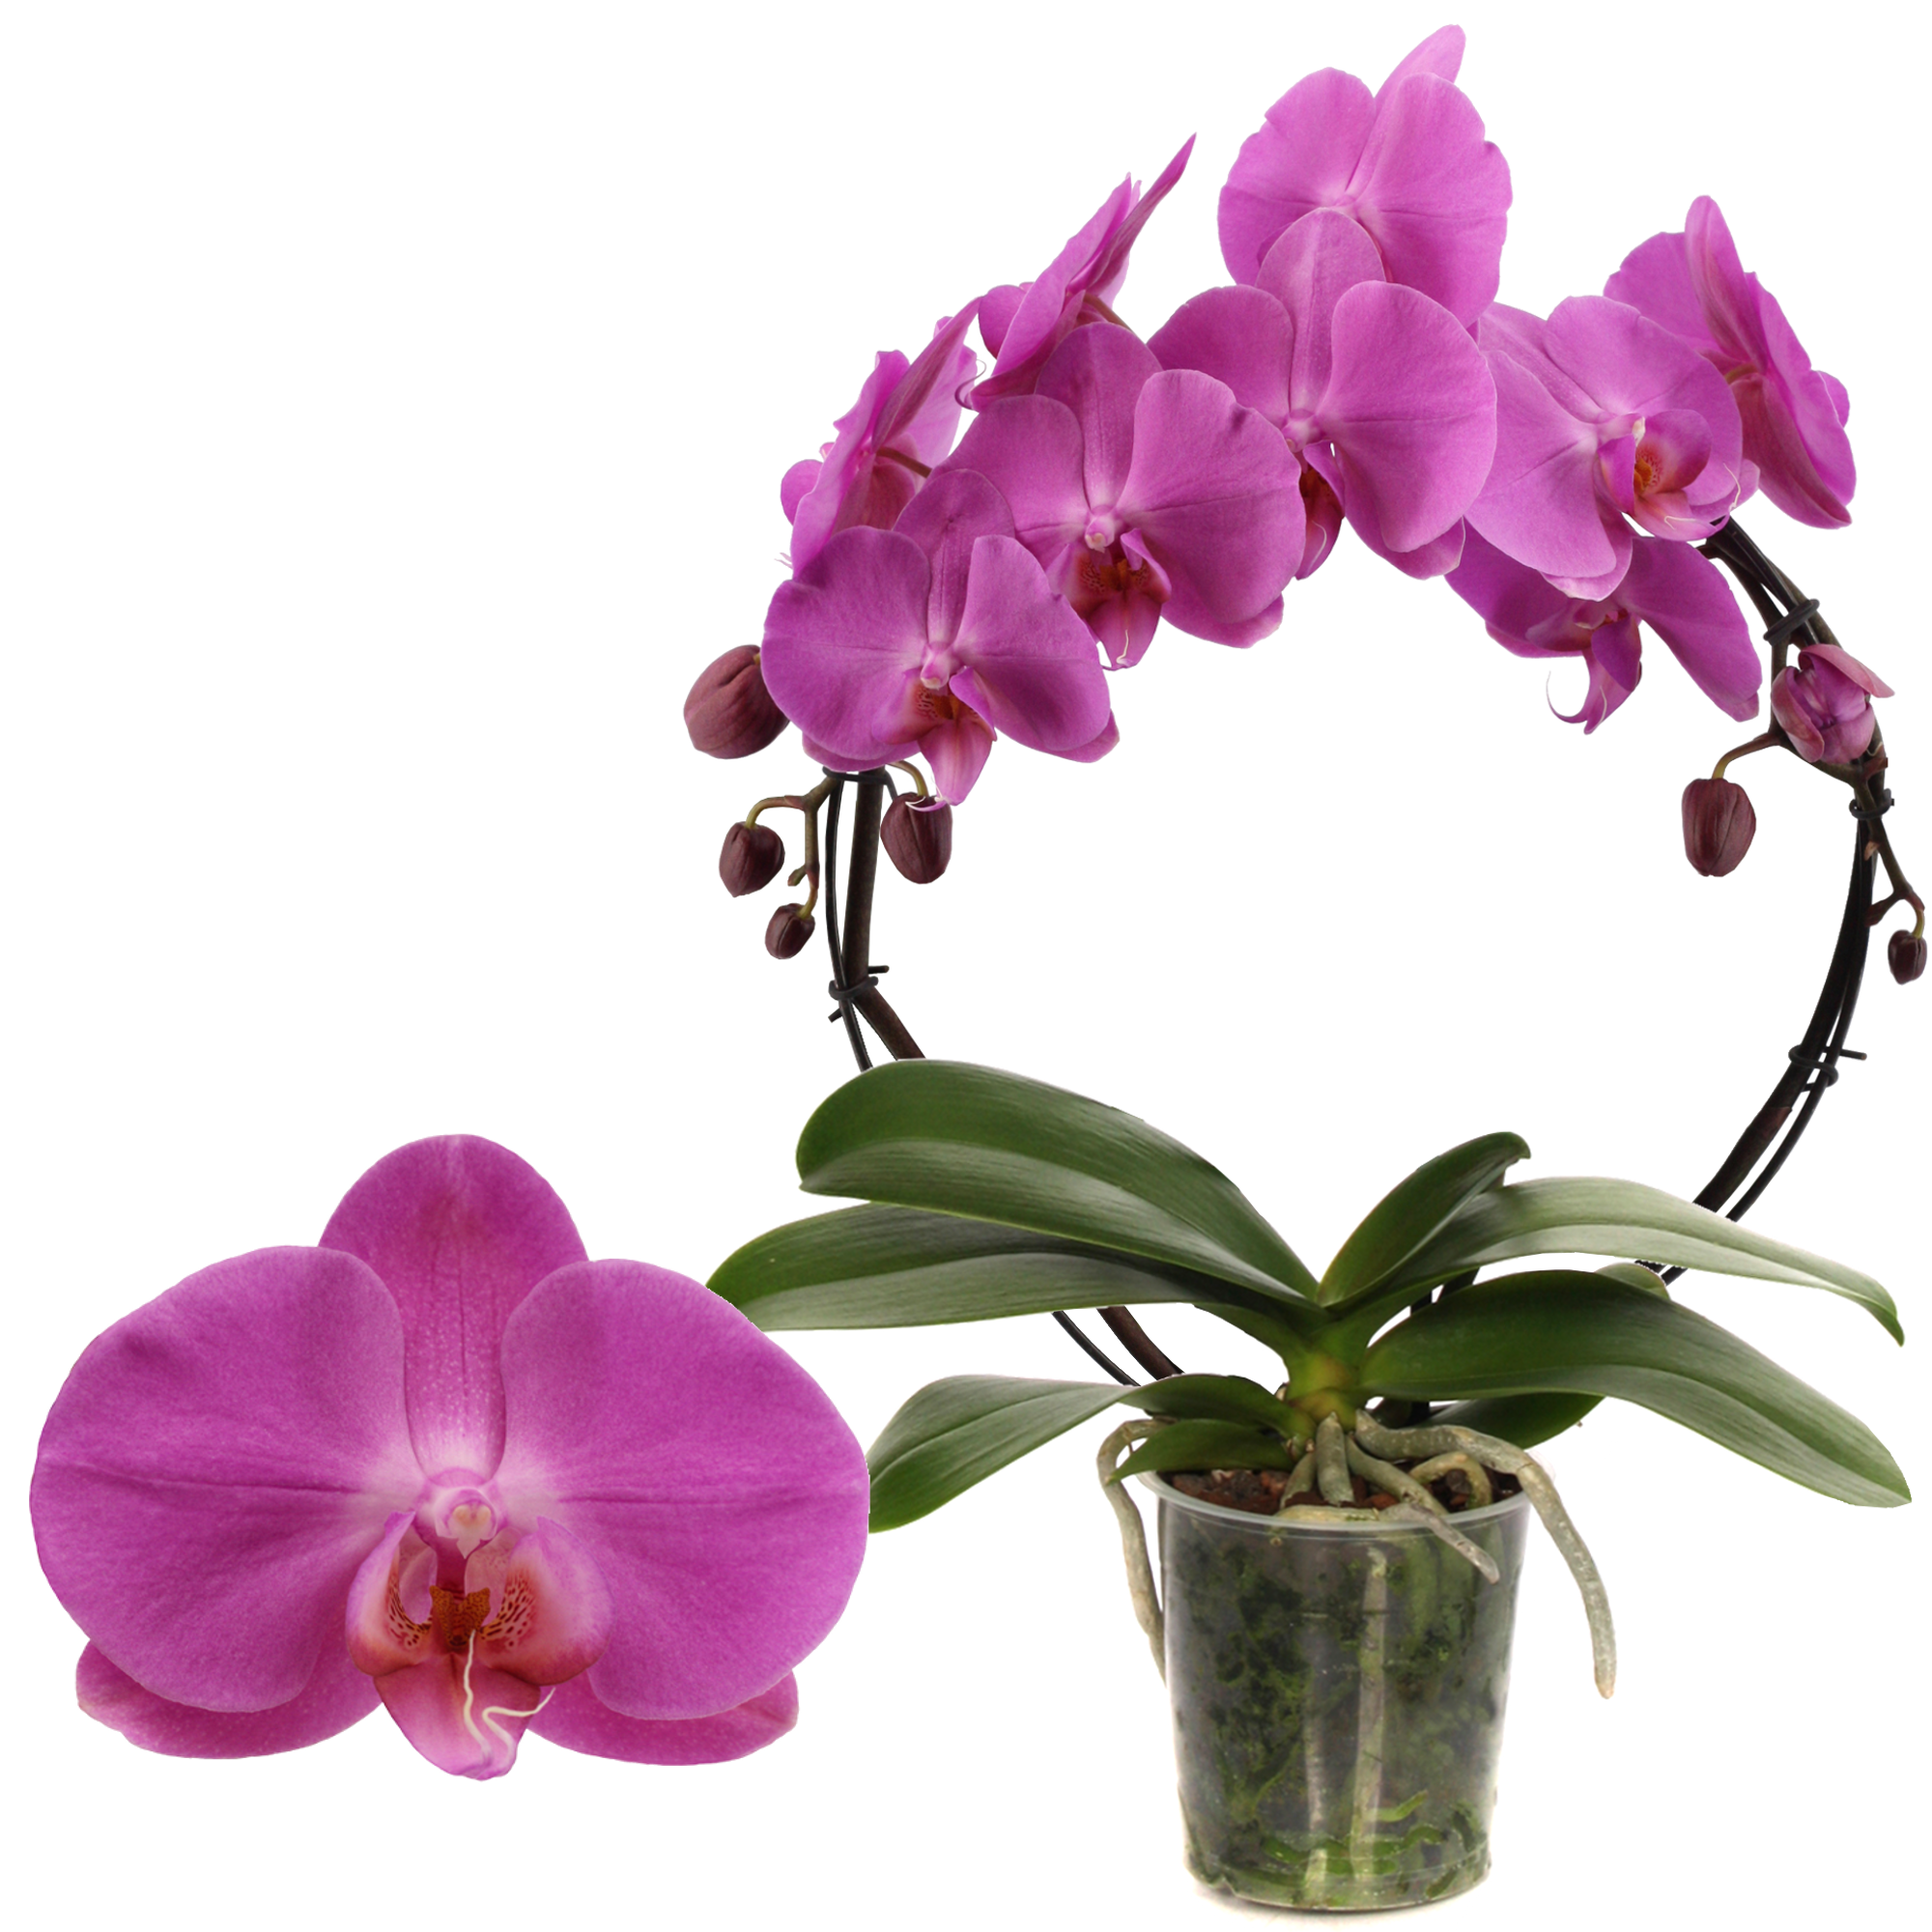 Schmetterlingsorchidee 'Las Palmas ' 1 Rispe am Bogen, pink, 12 cm Topf + product picture